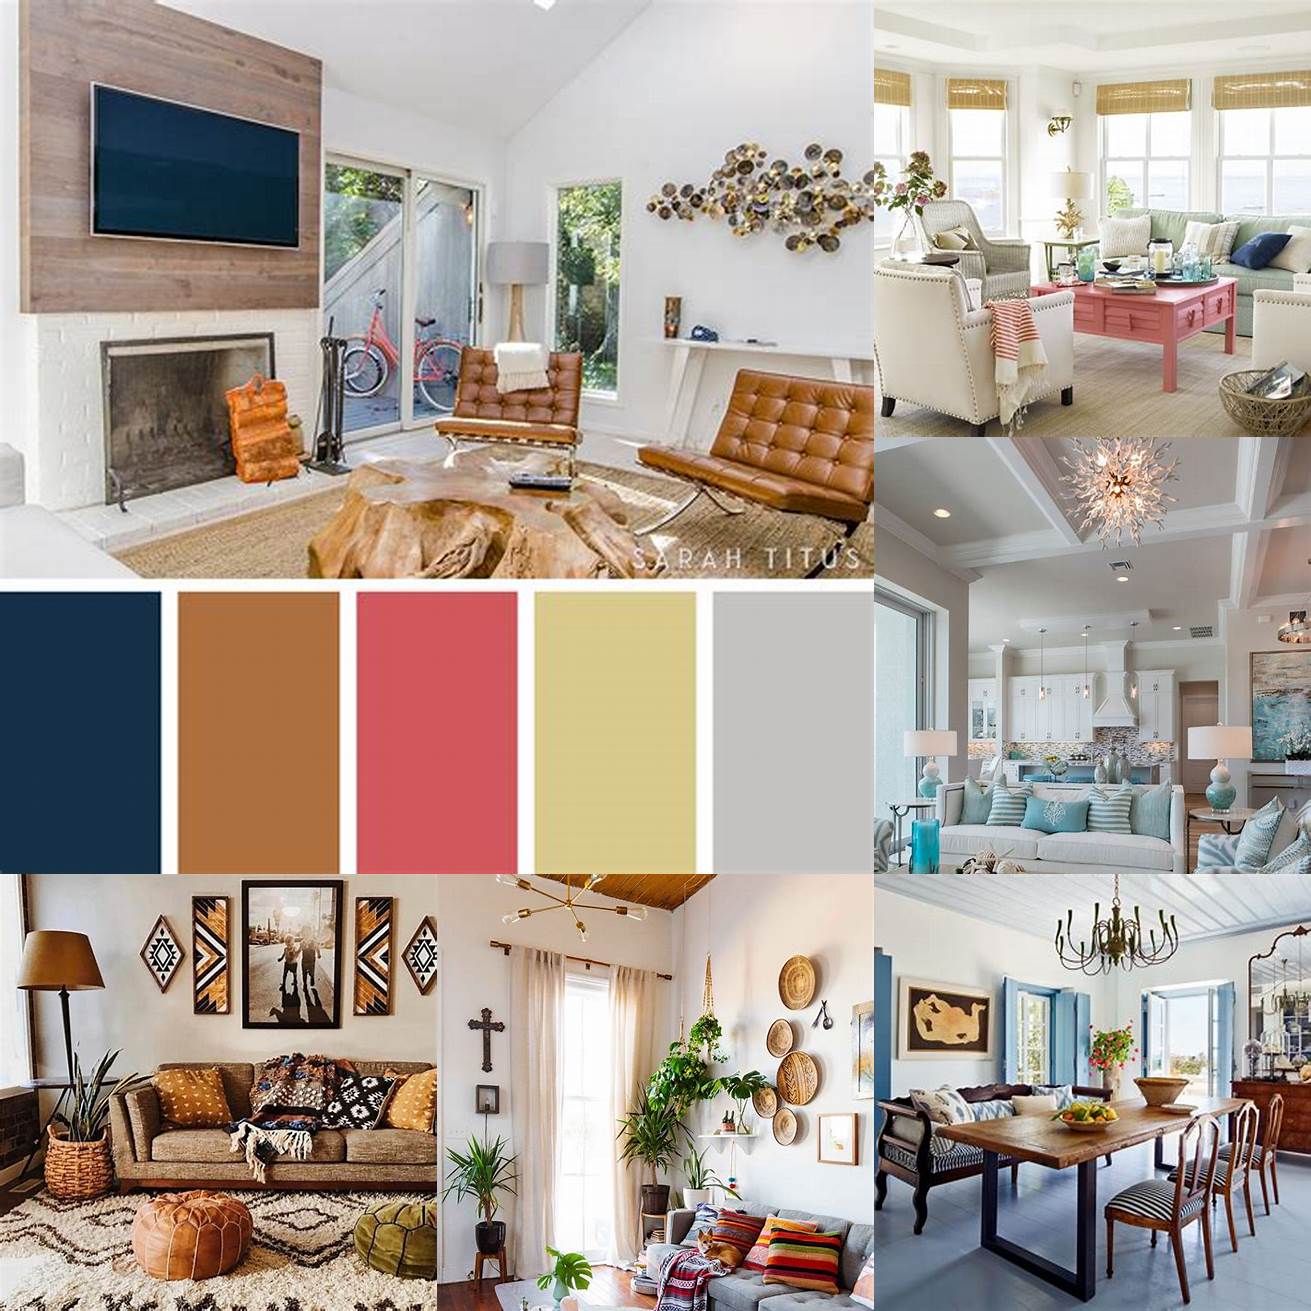 Choose a design that matches your decor theme